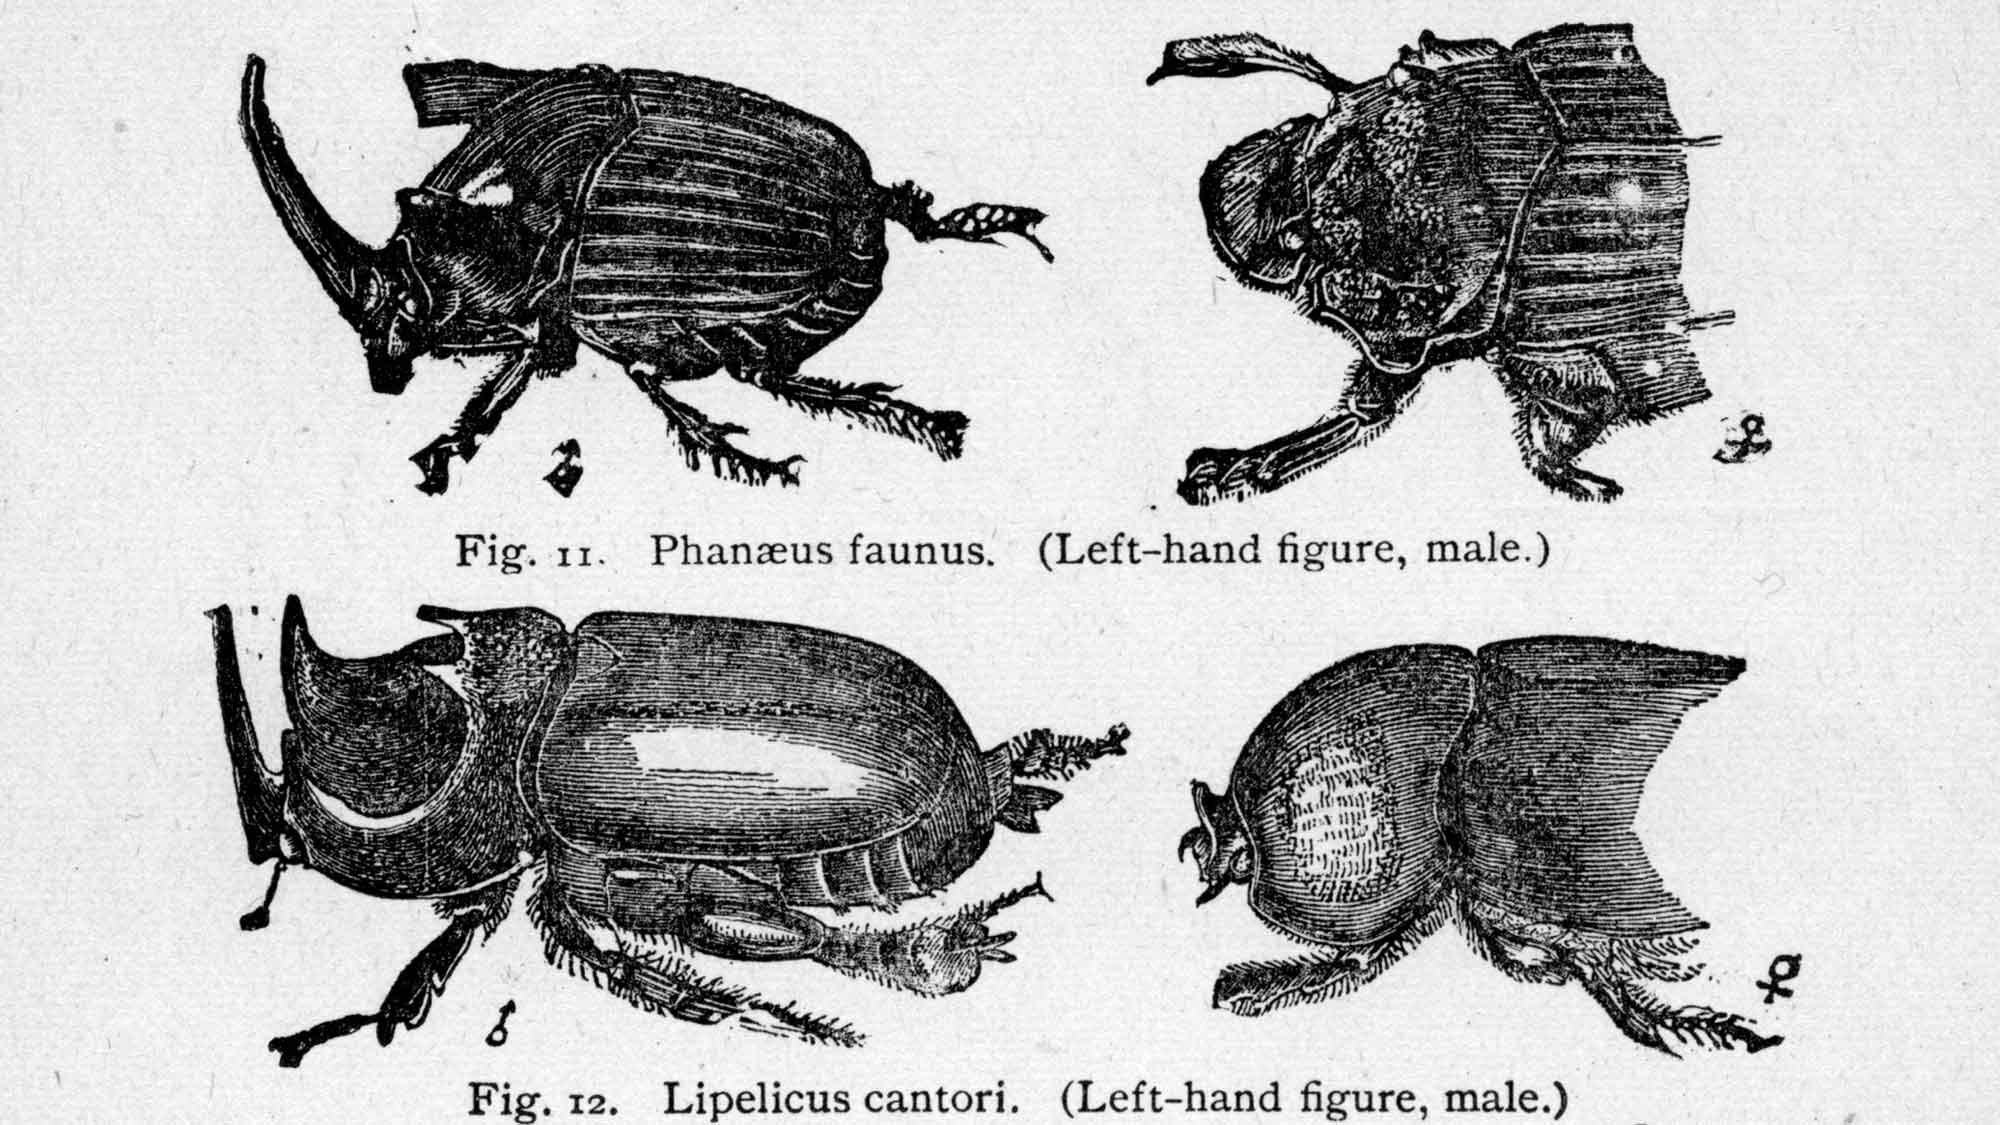 Historical image showing drawings of beetles.